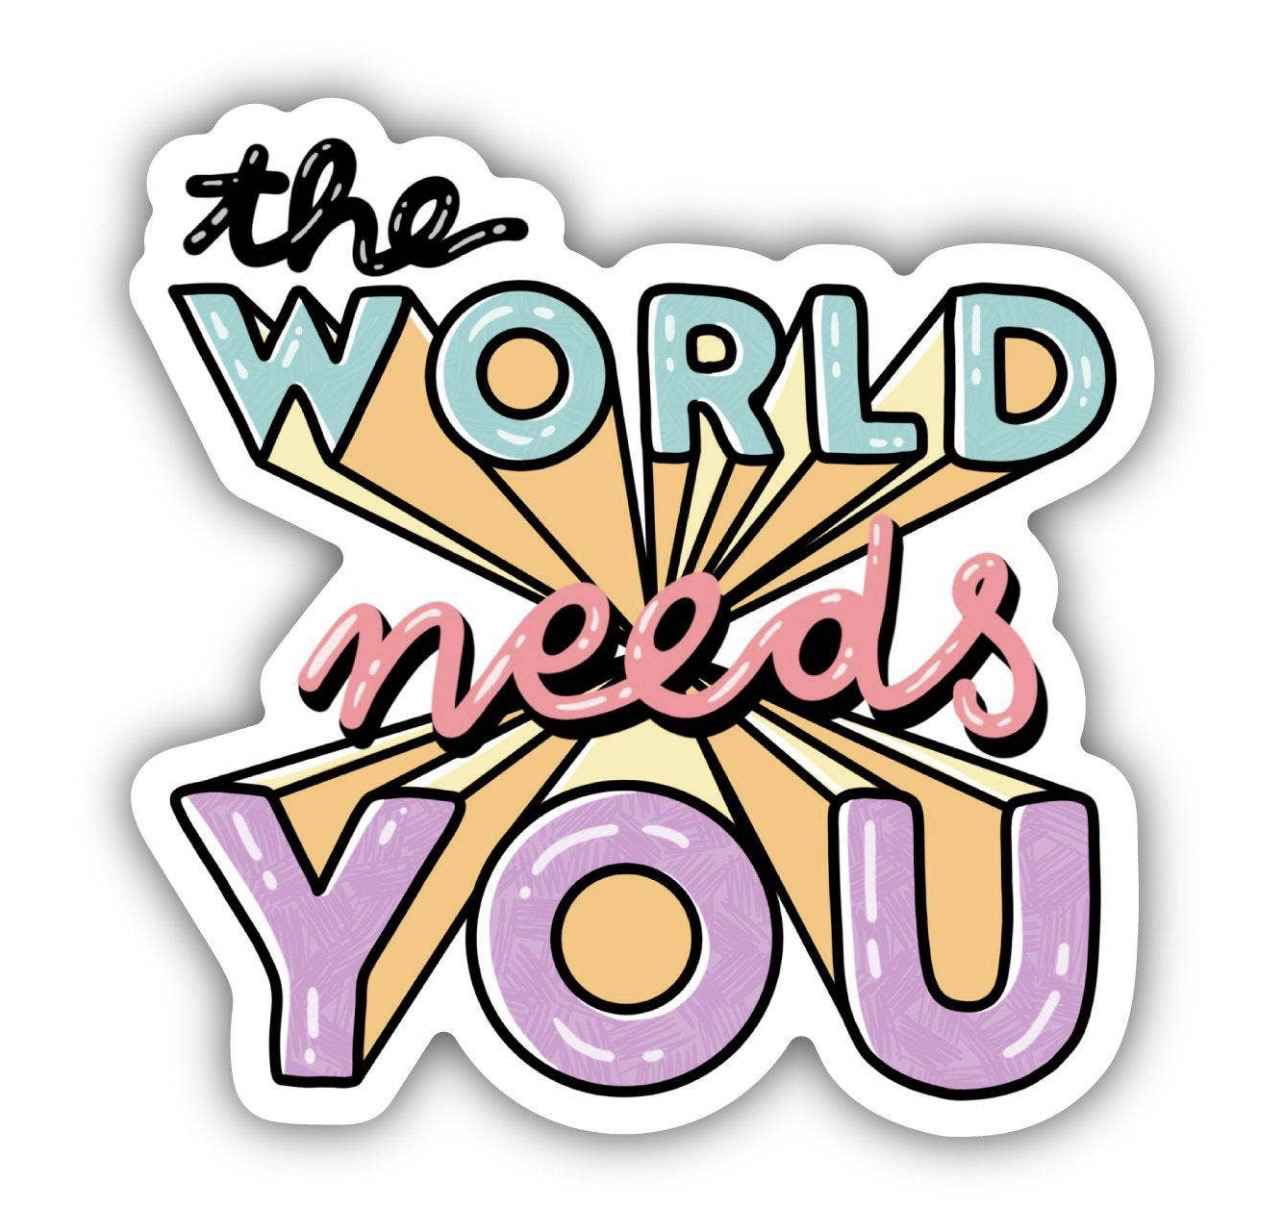 The World Needs You Sticker